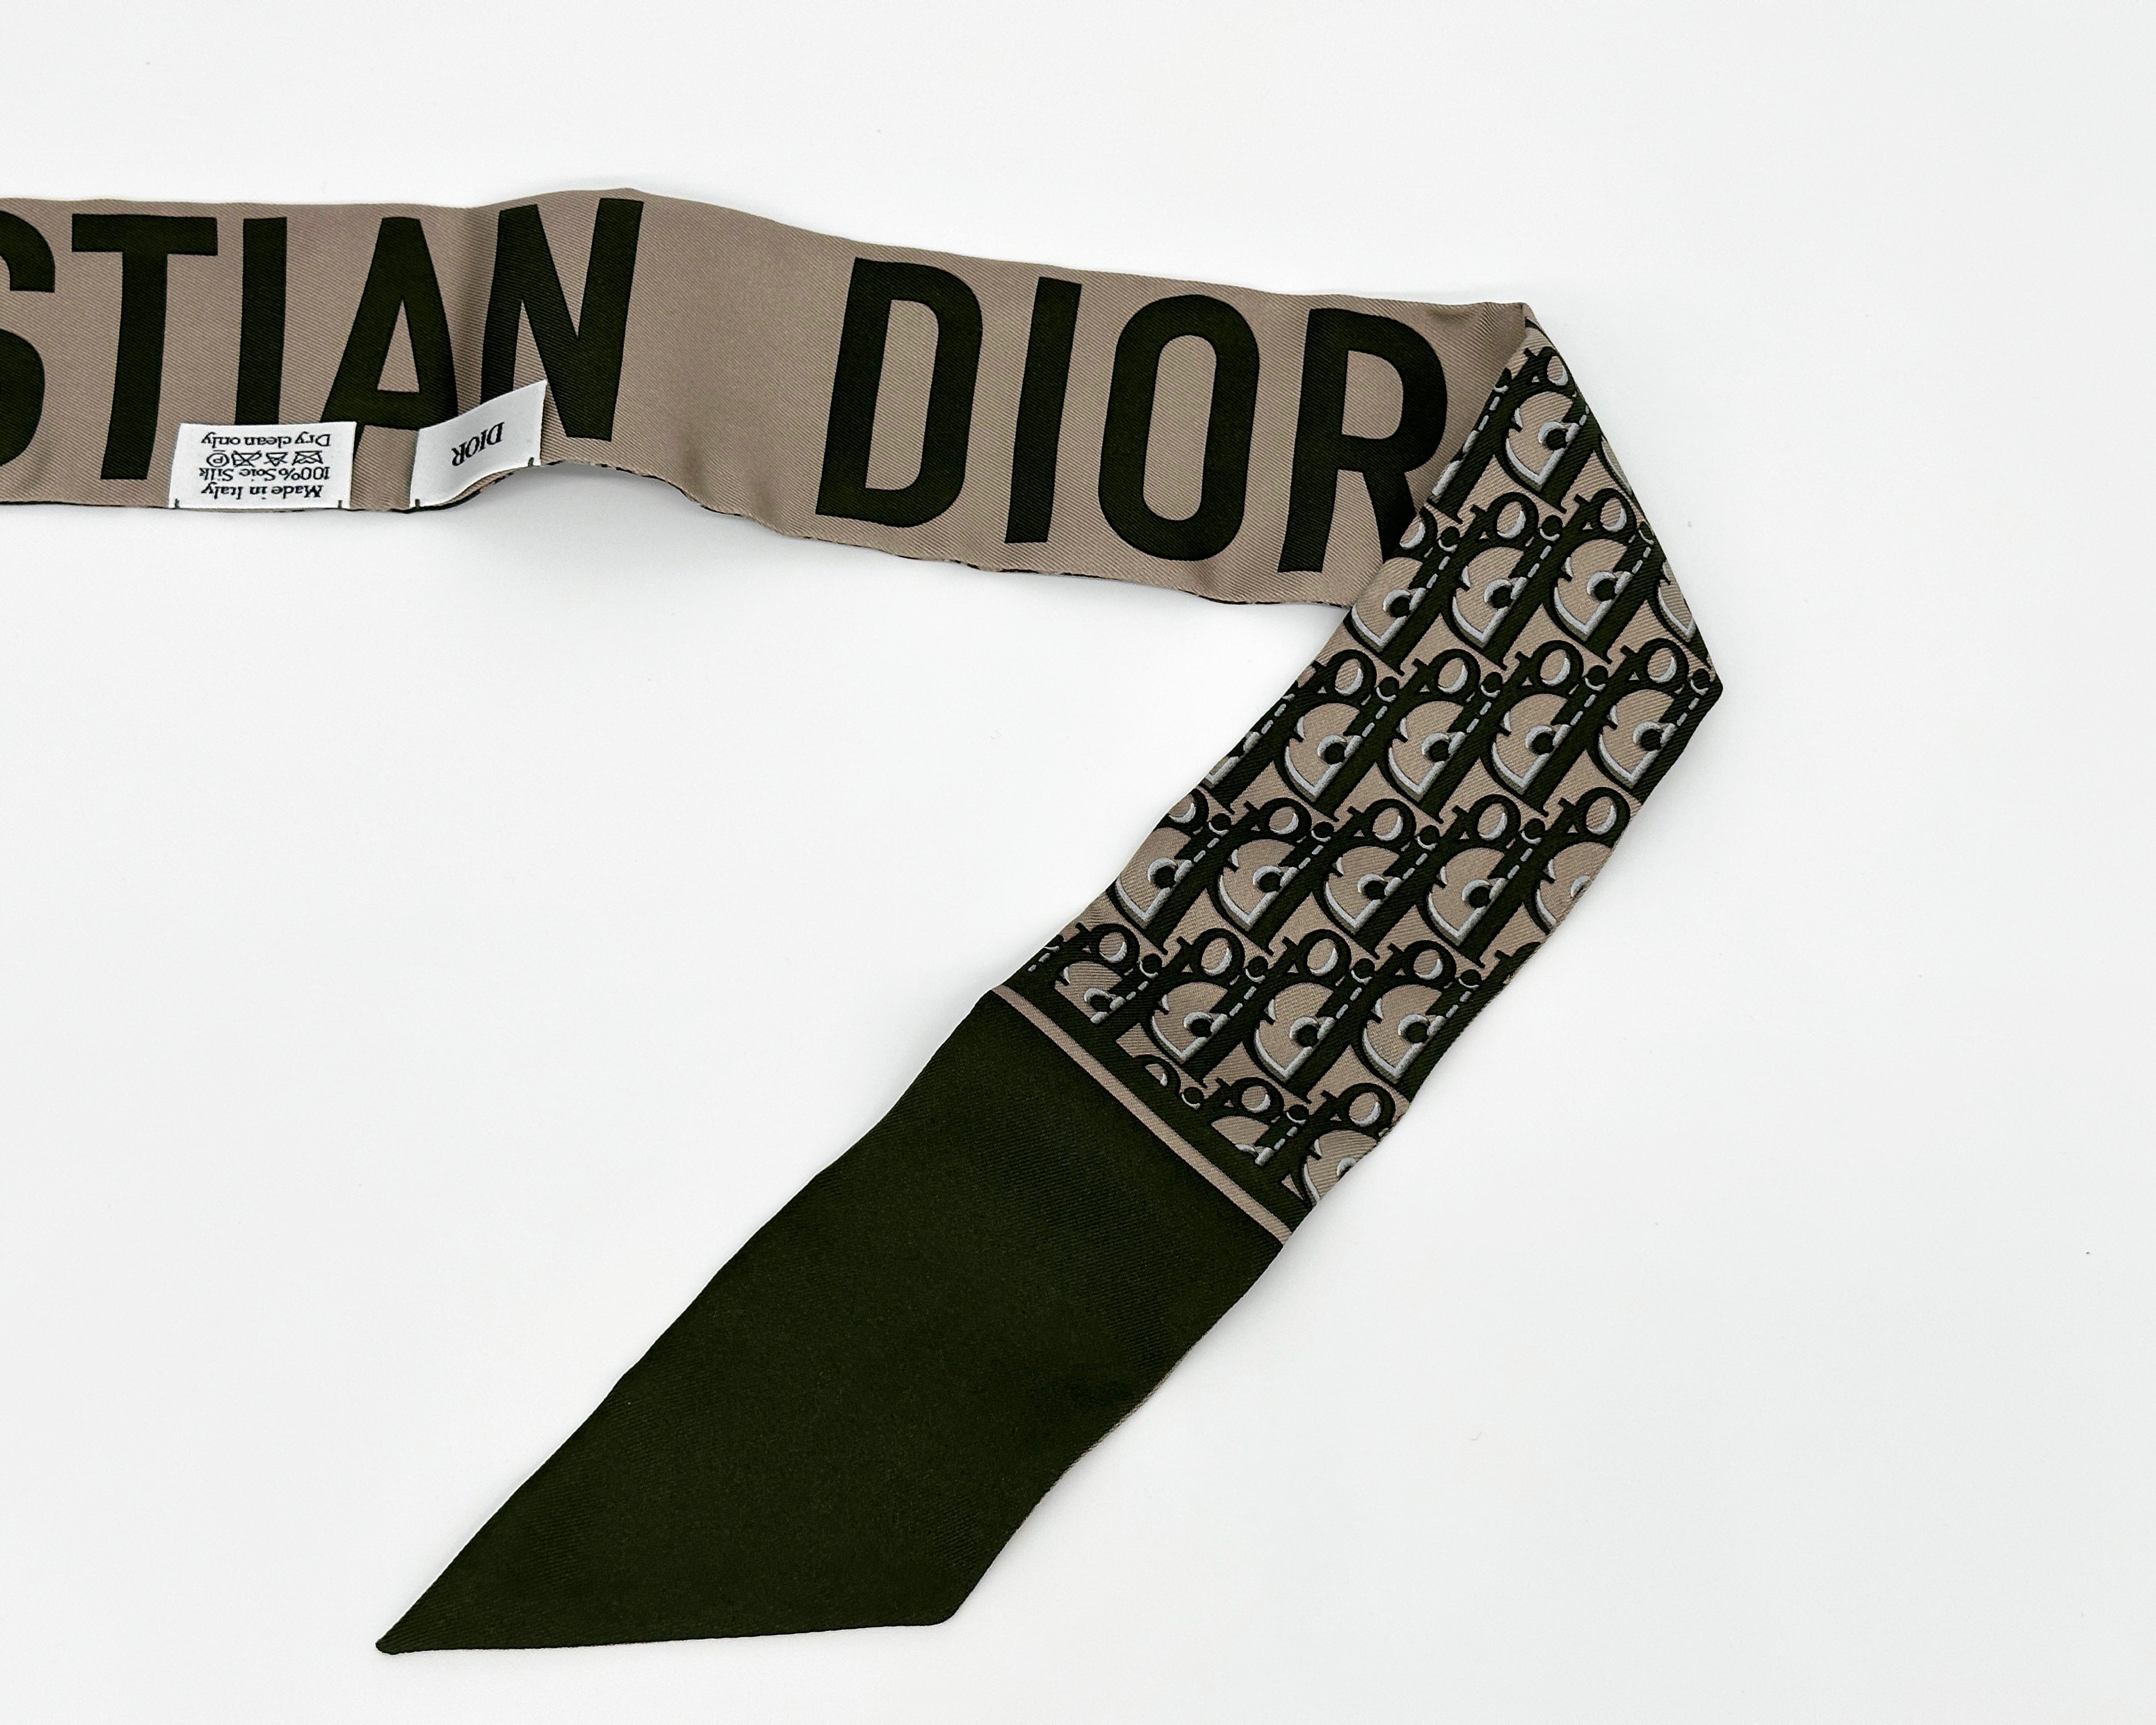 Écharpe Mitzah Christian Dior